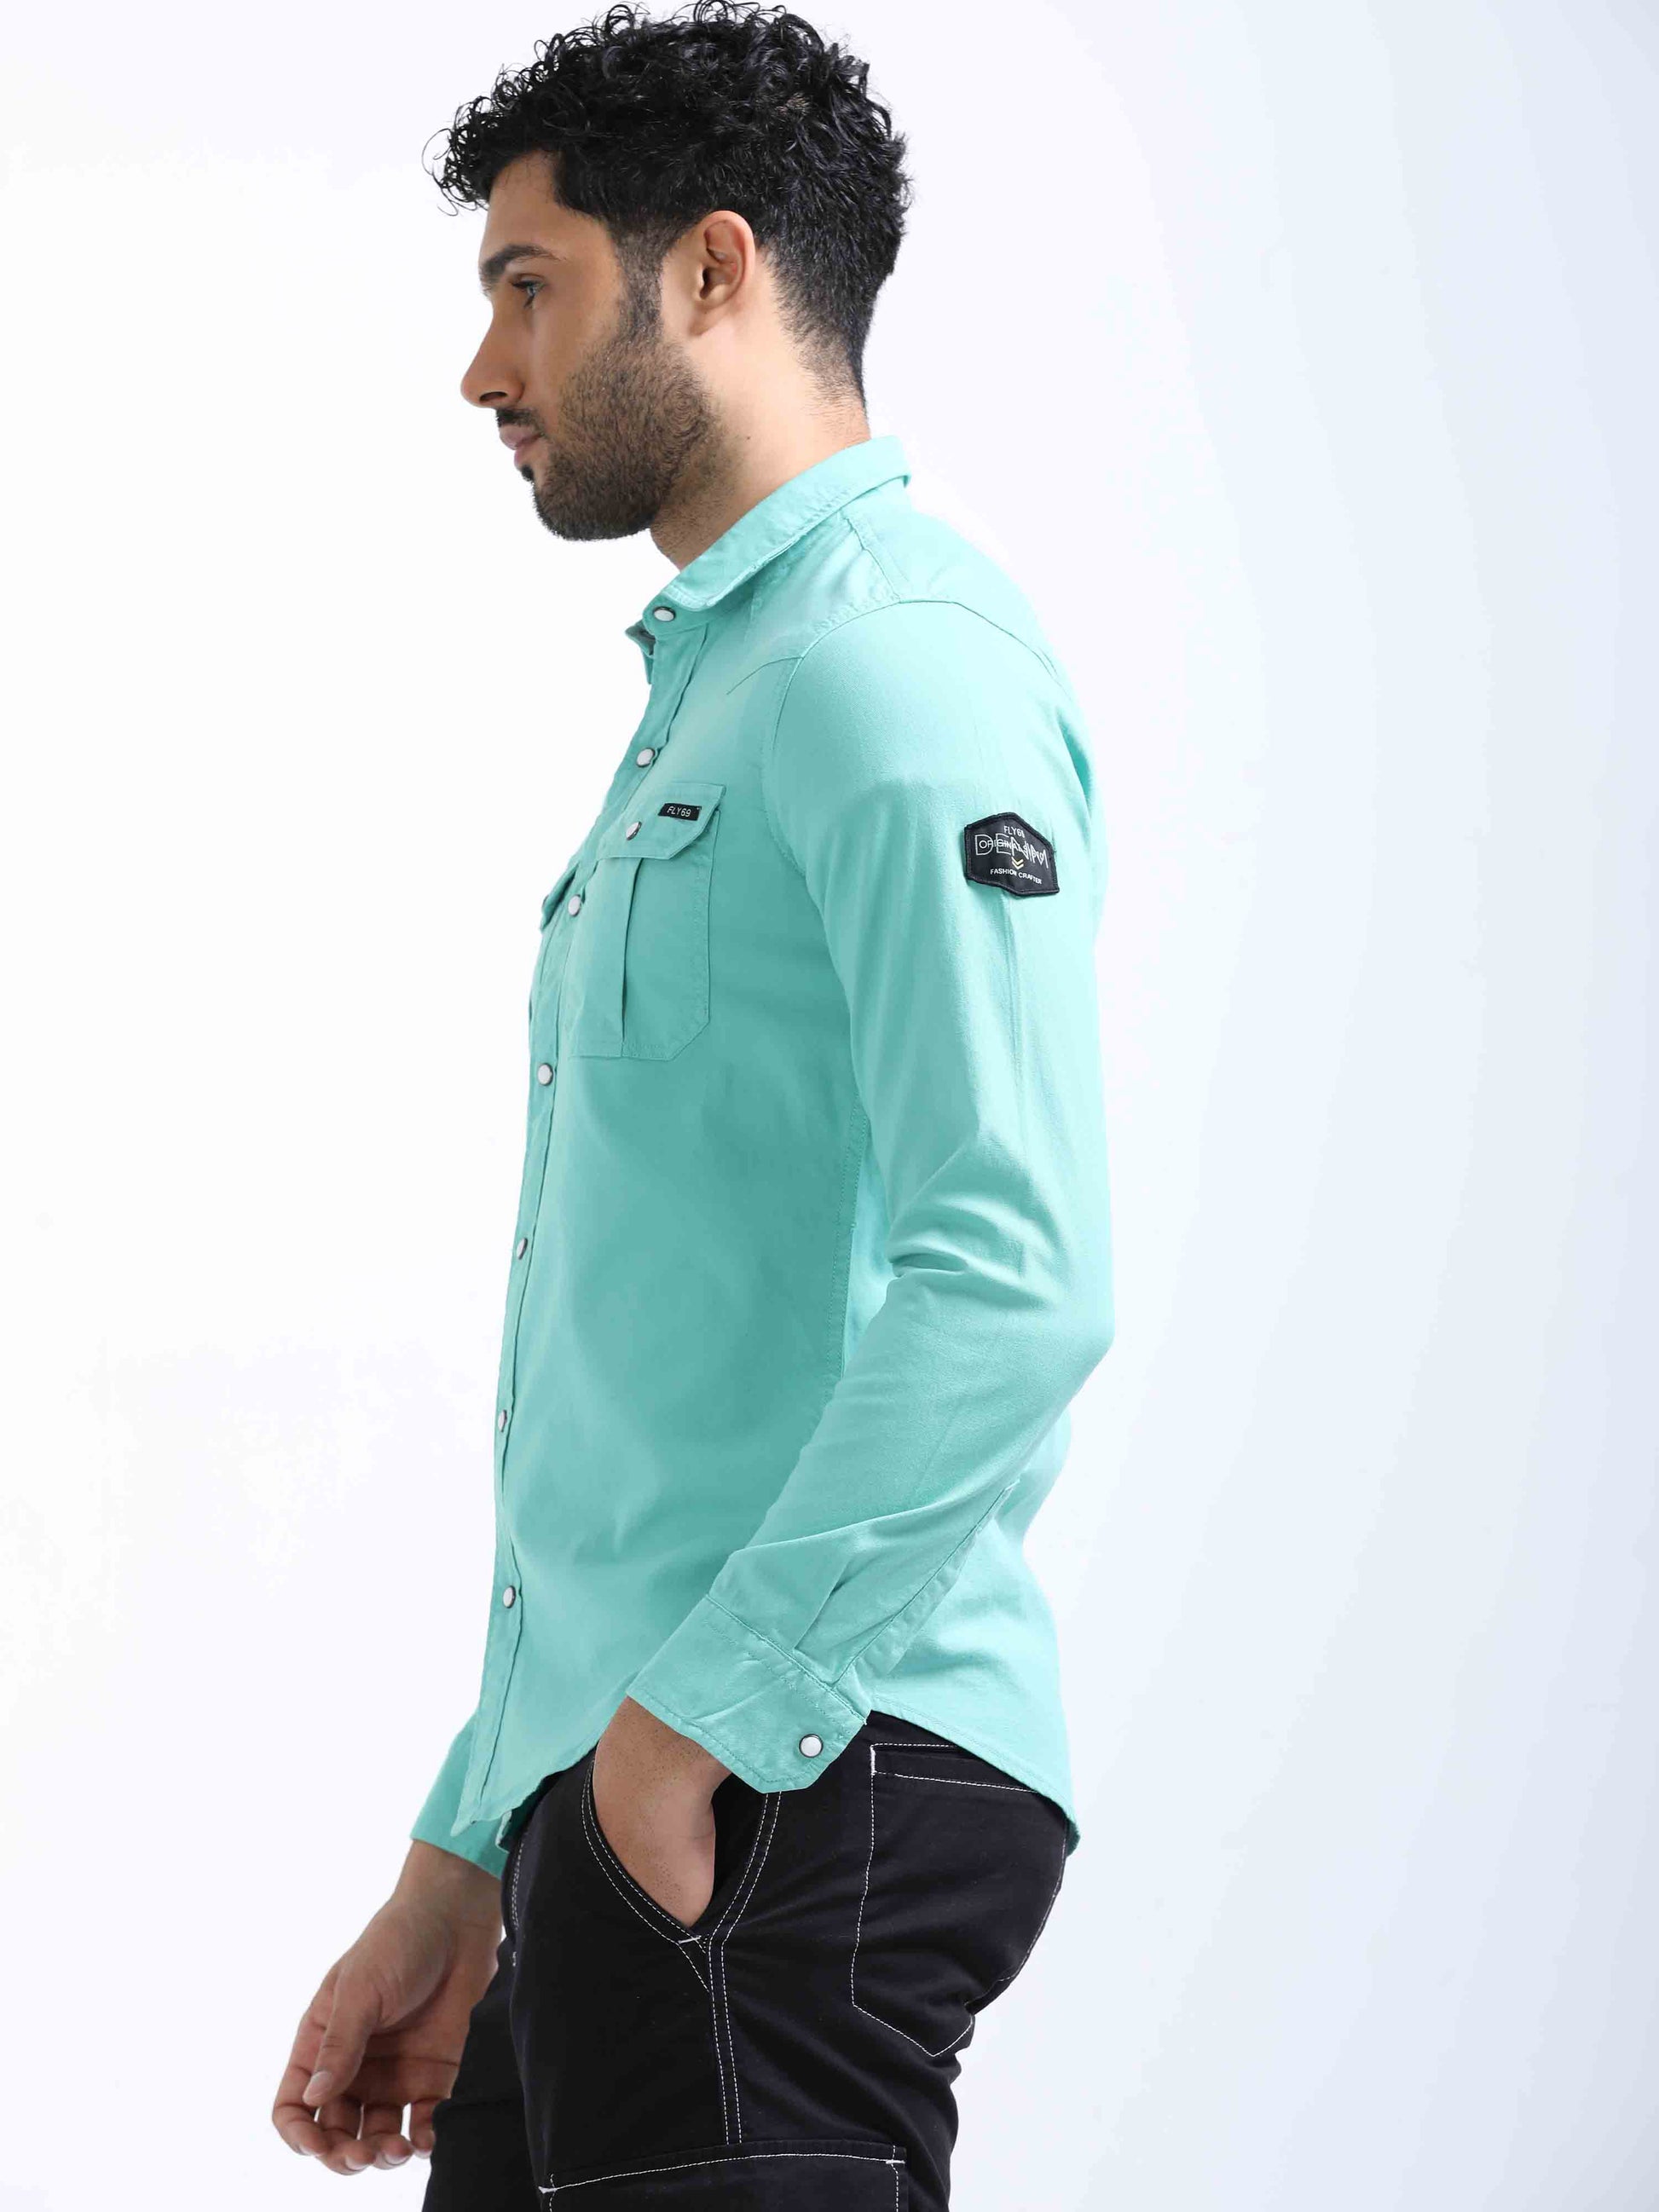 Turquoise Double Pocket Shirt For Men